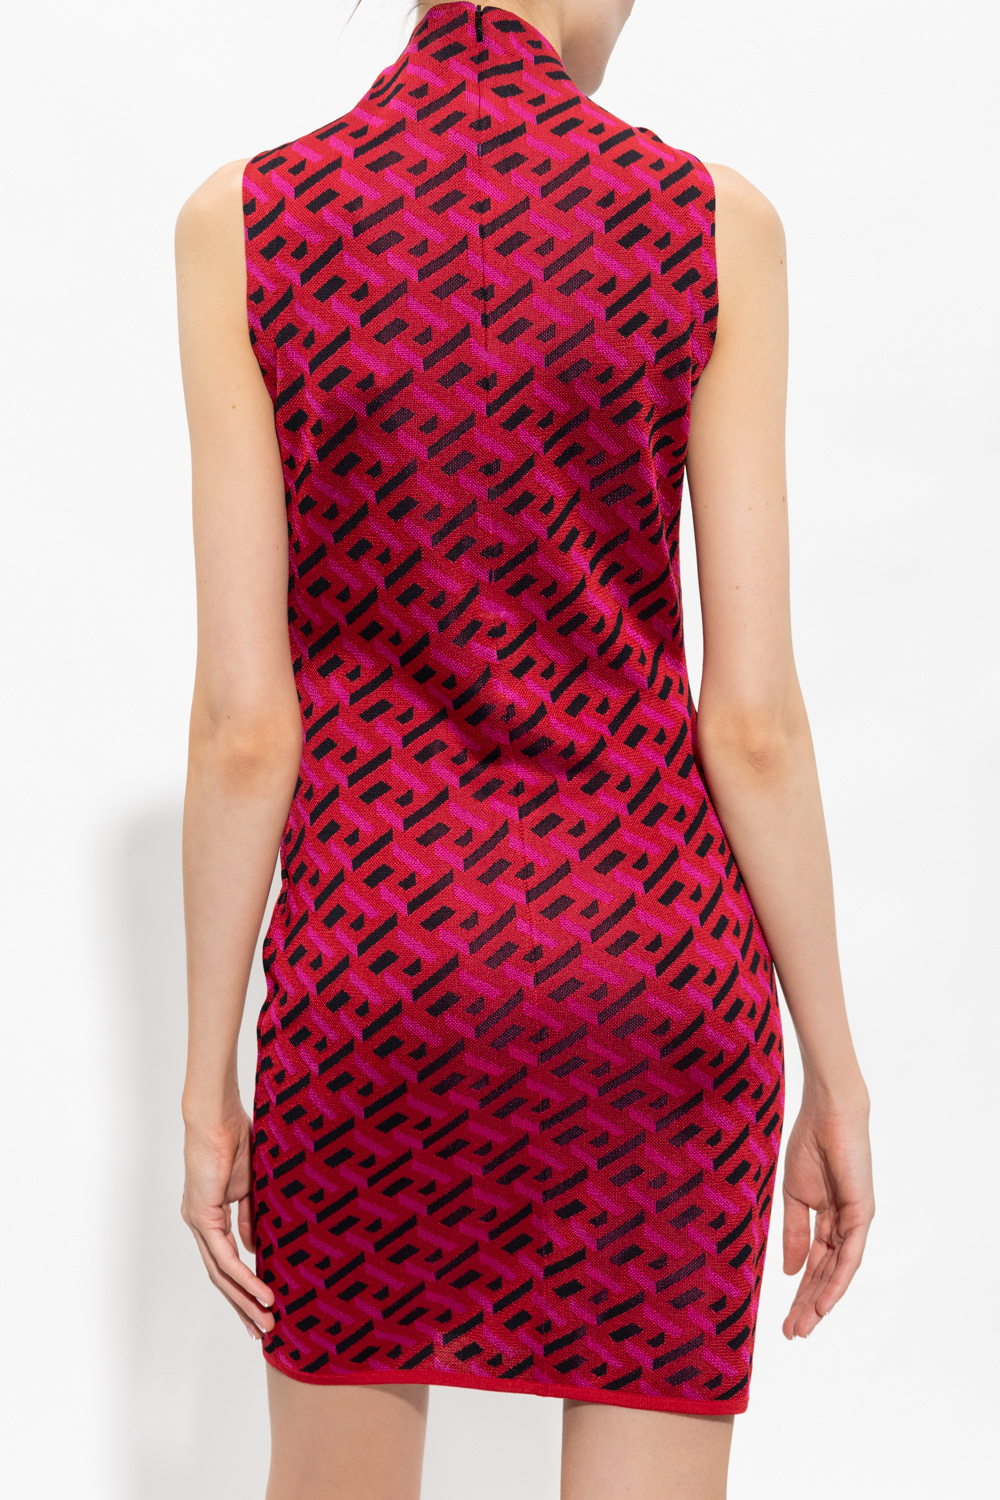 Versace dress touched with La Greca pattern